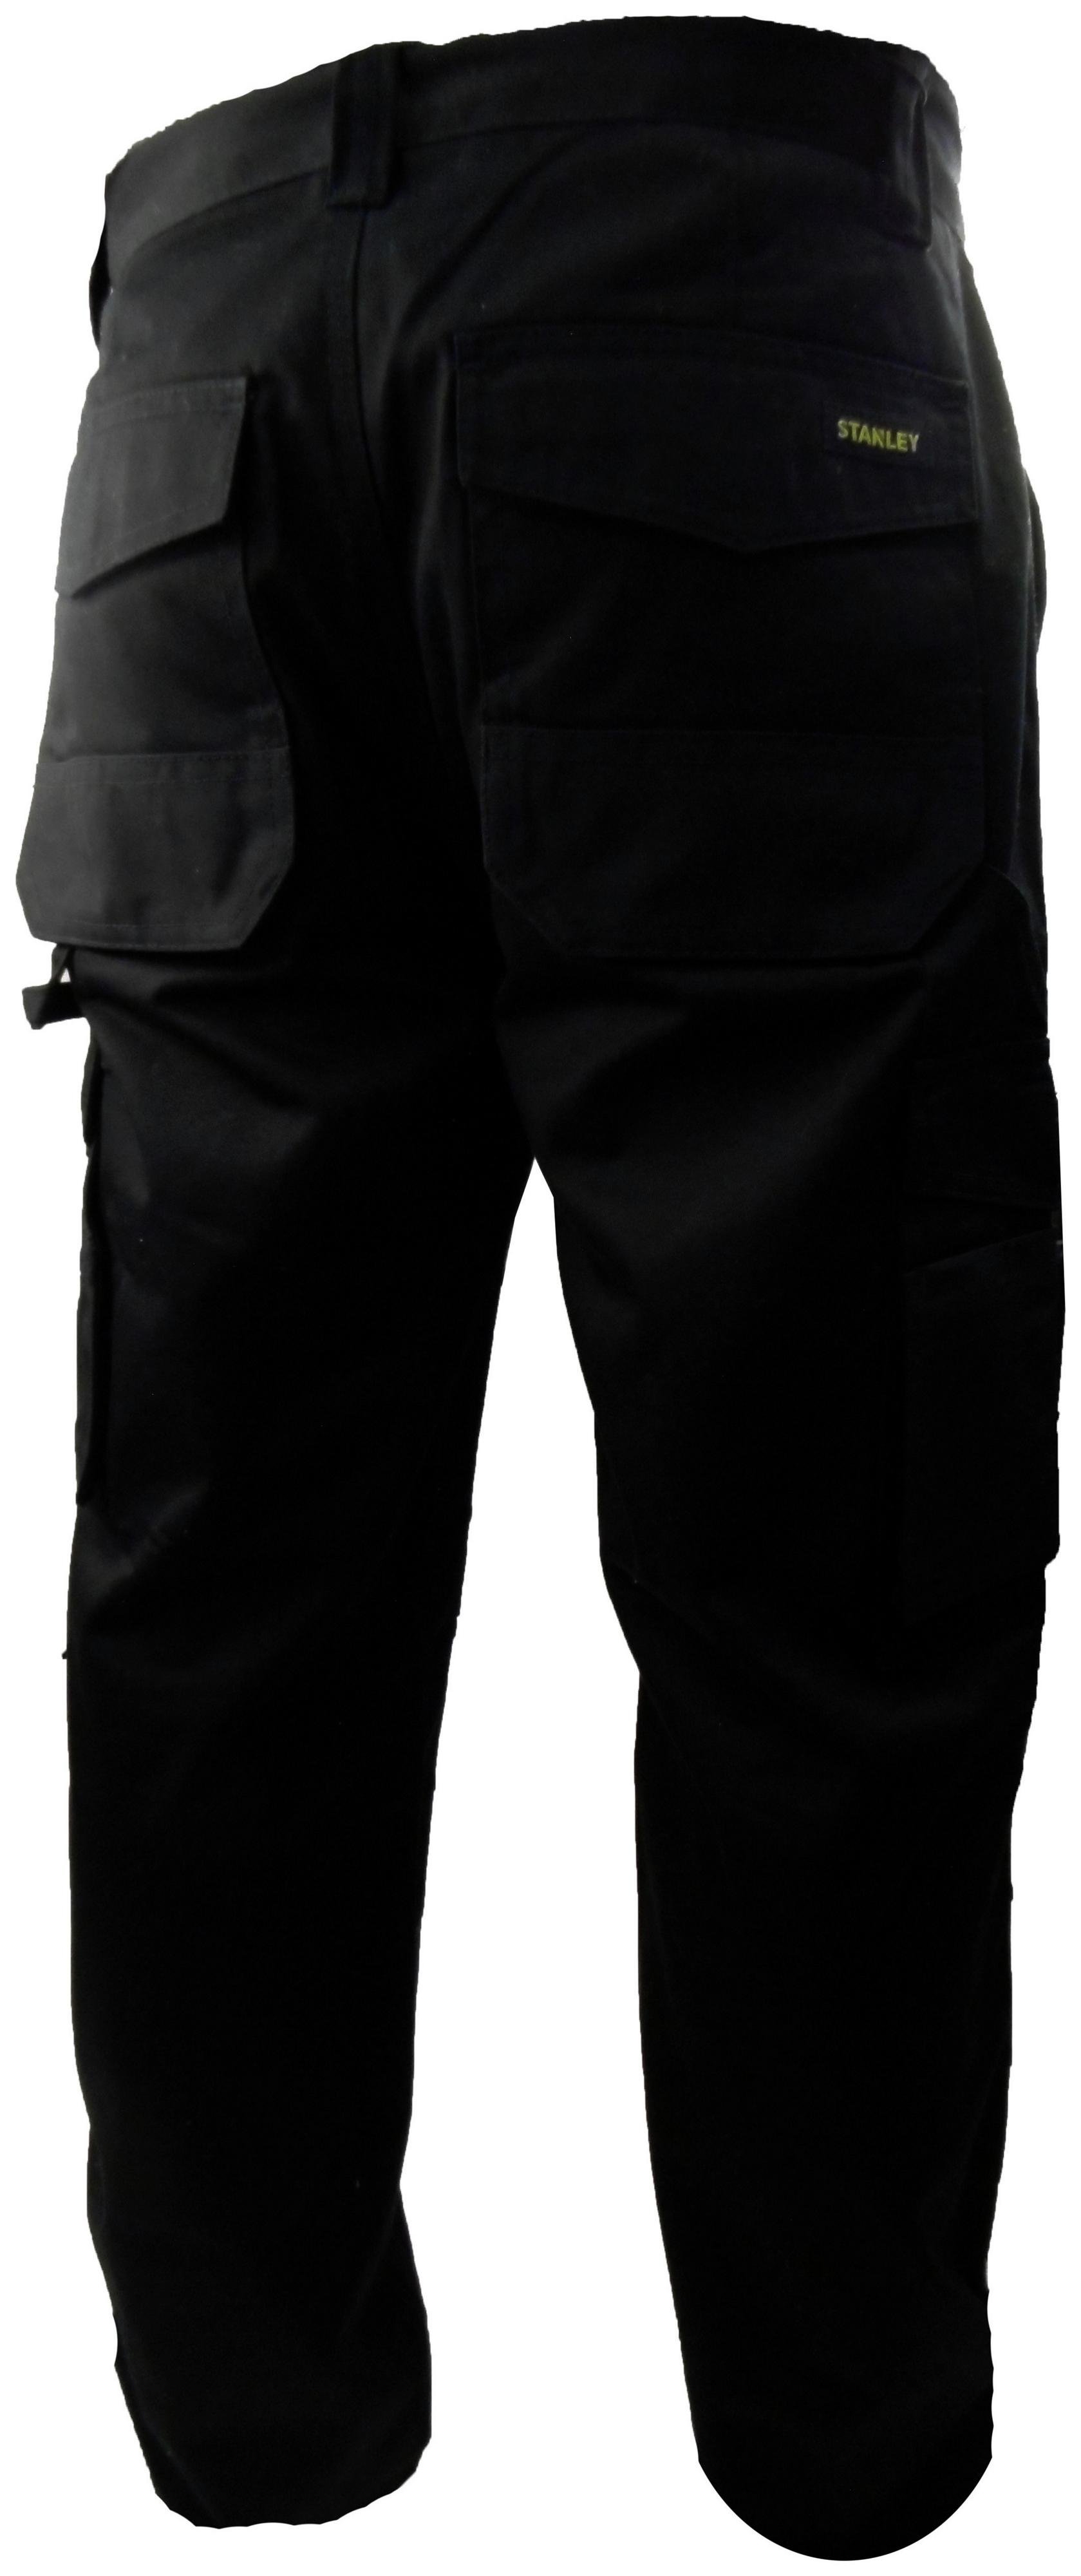 Stanley Phoenix Men's Black Trouser - 33 to 40 inch. Review